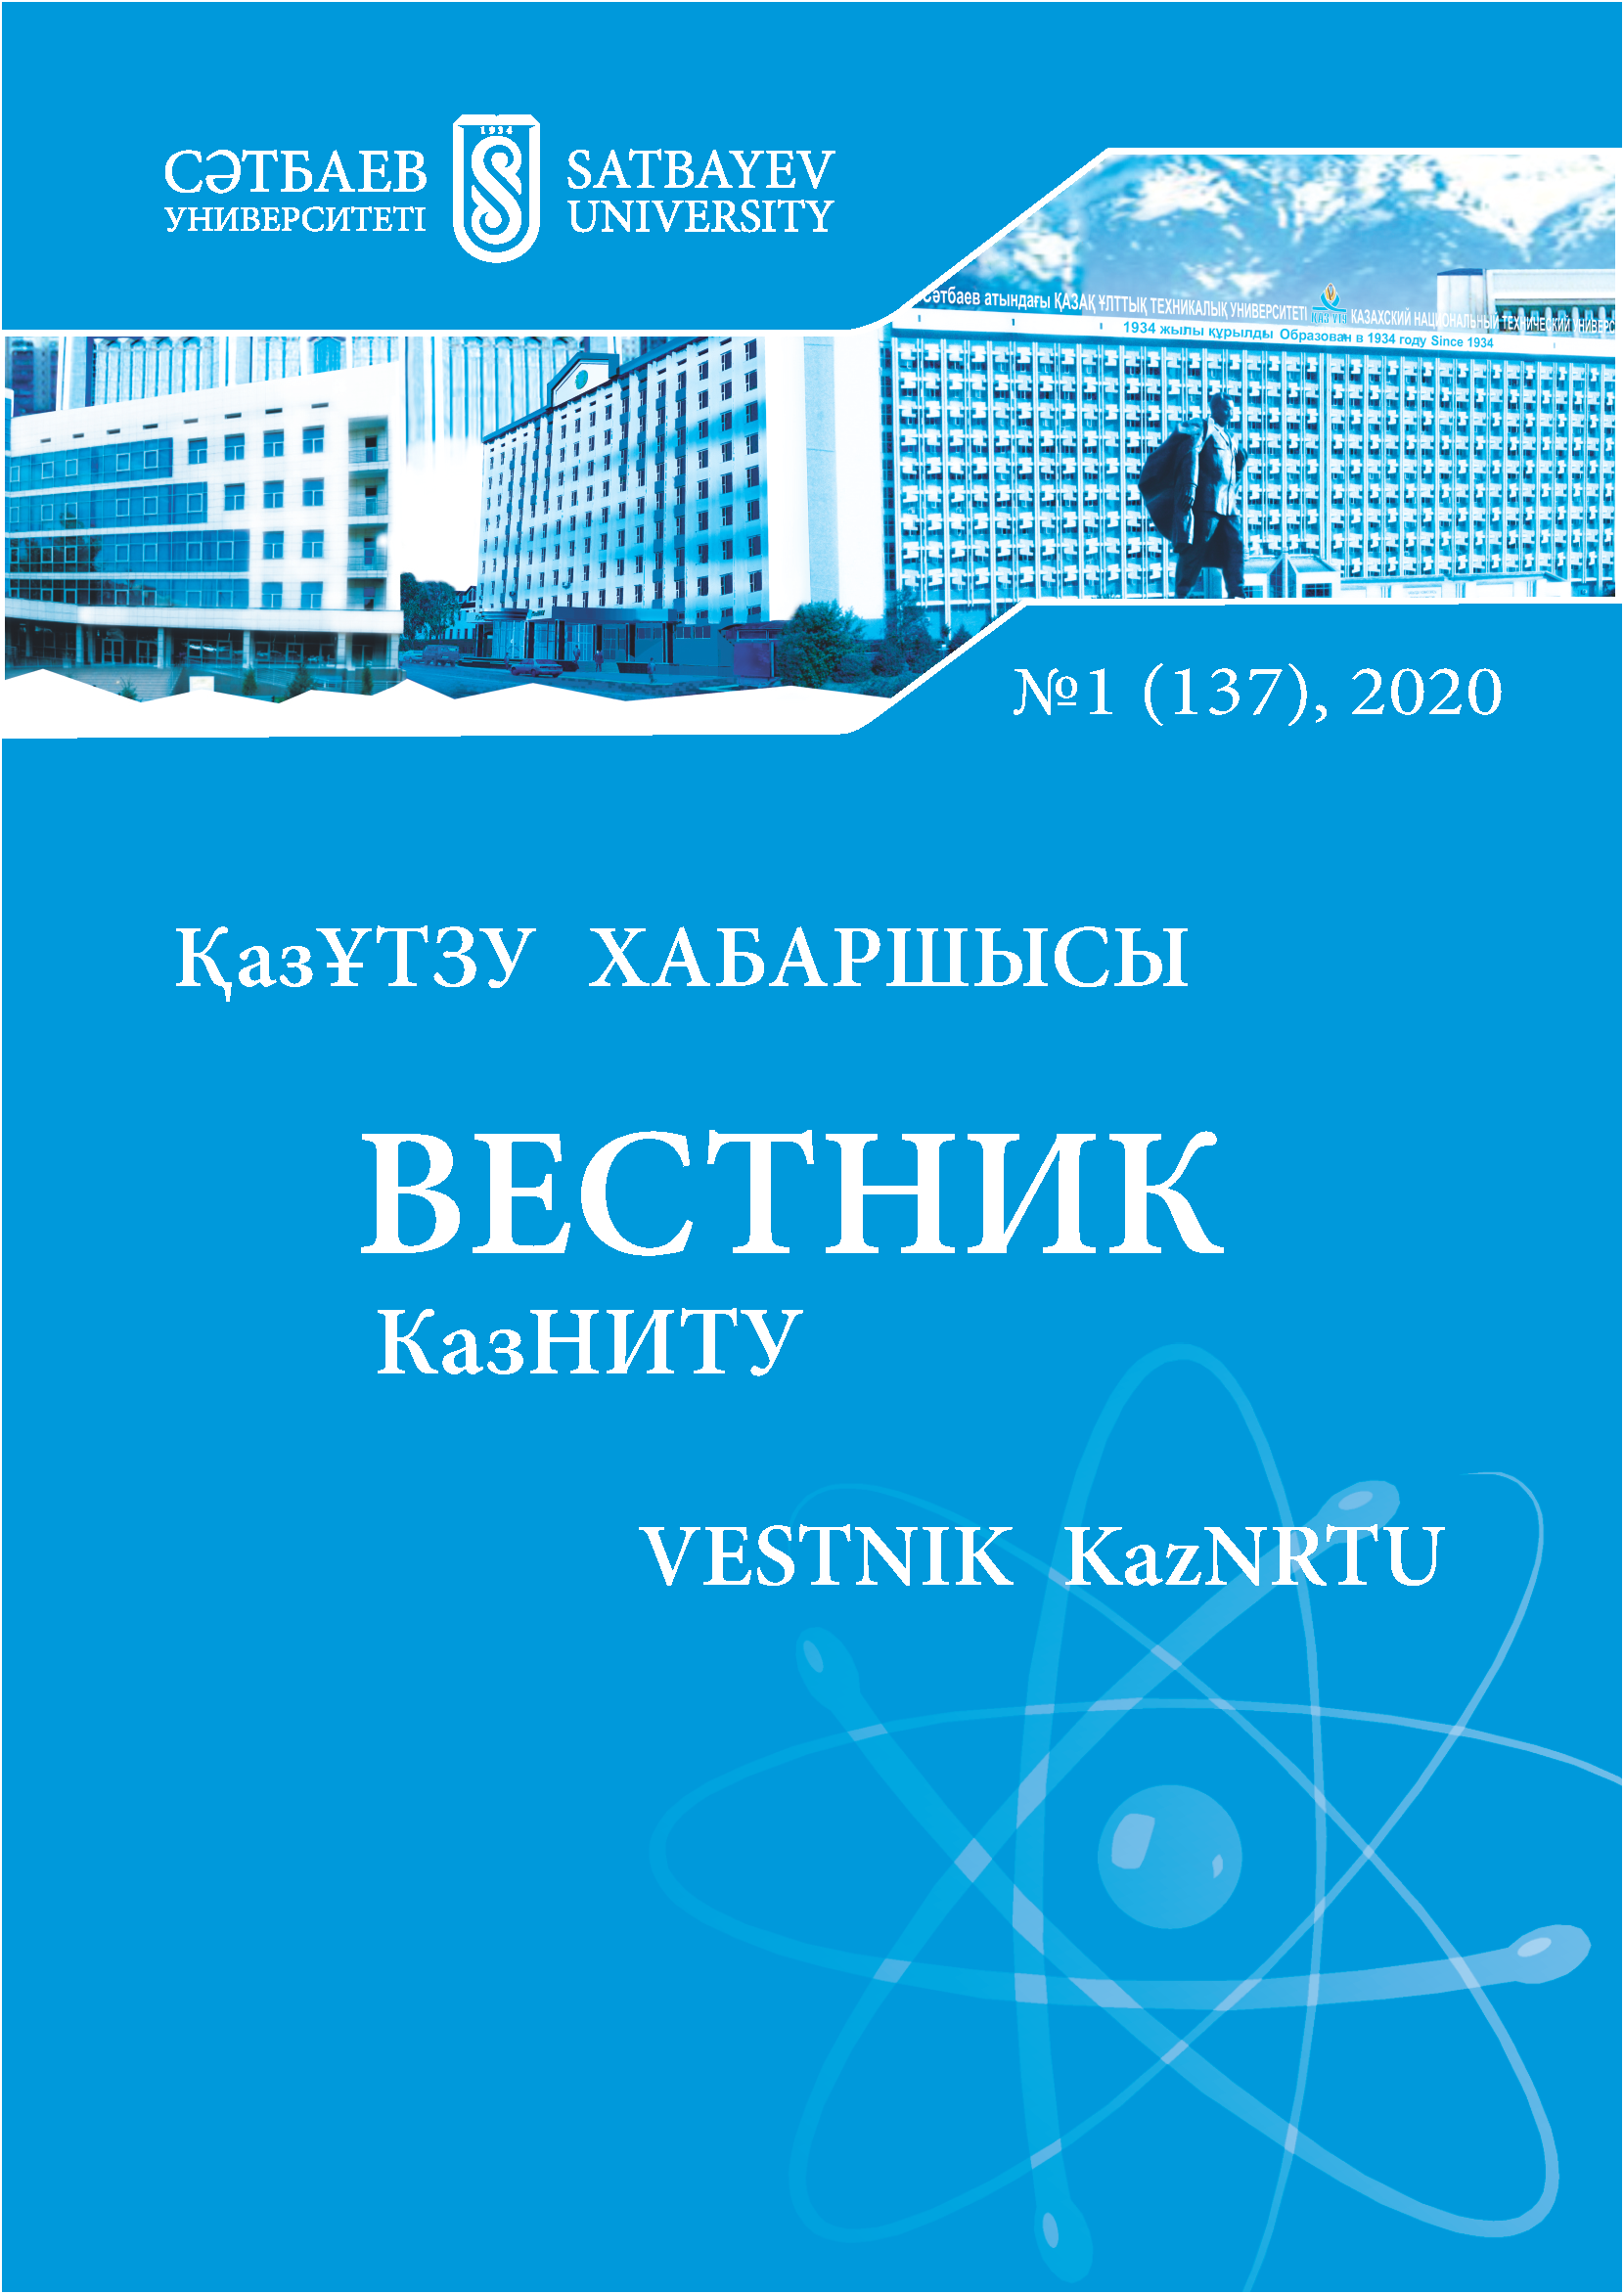 					View Vol. 137 No. 1 (2020): Vestnik KazNRTU
				